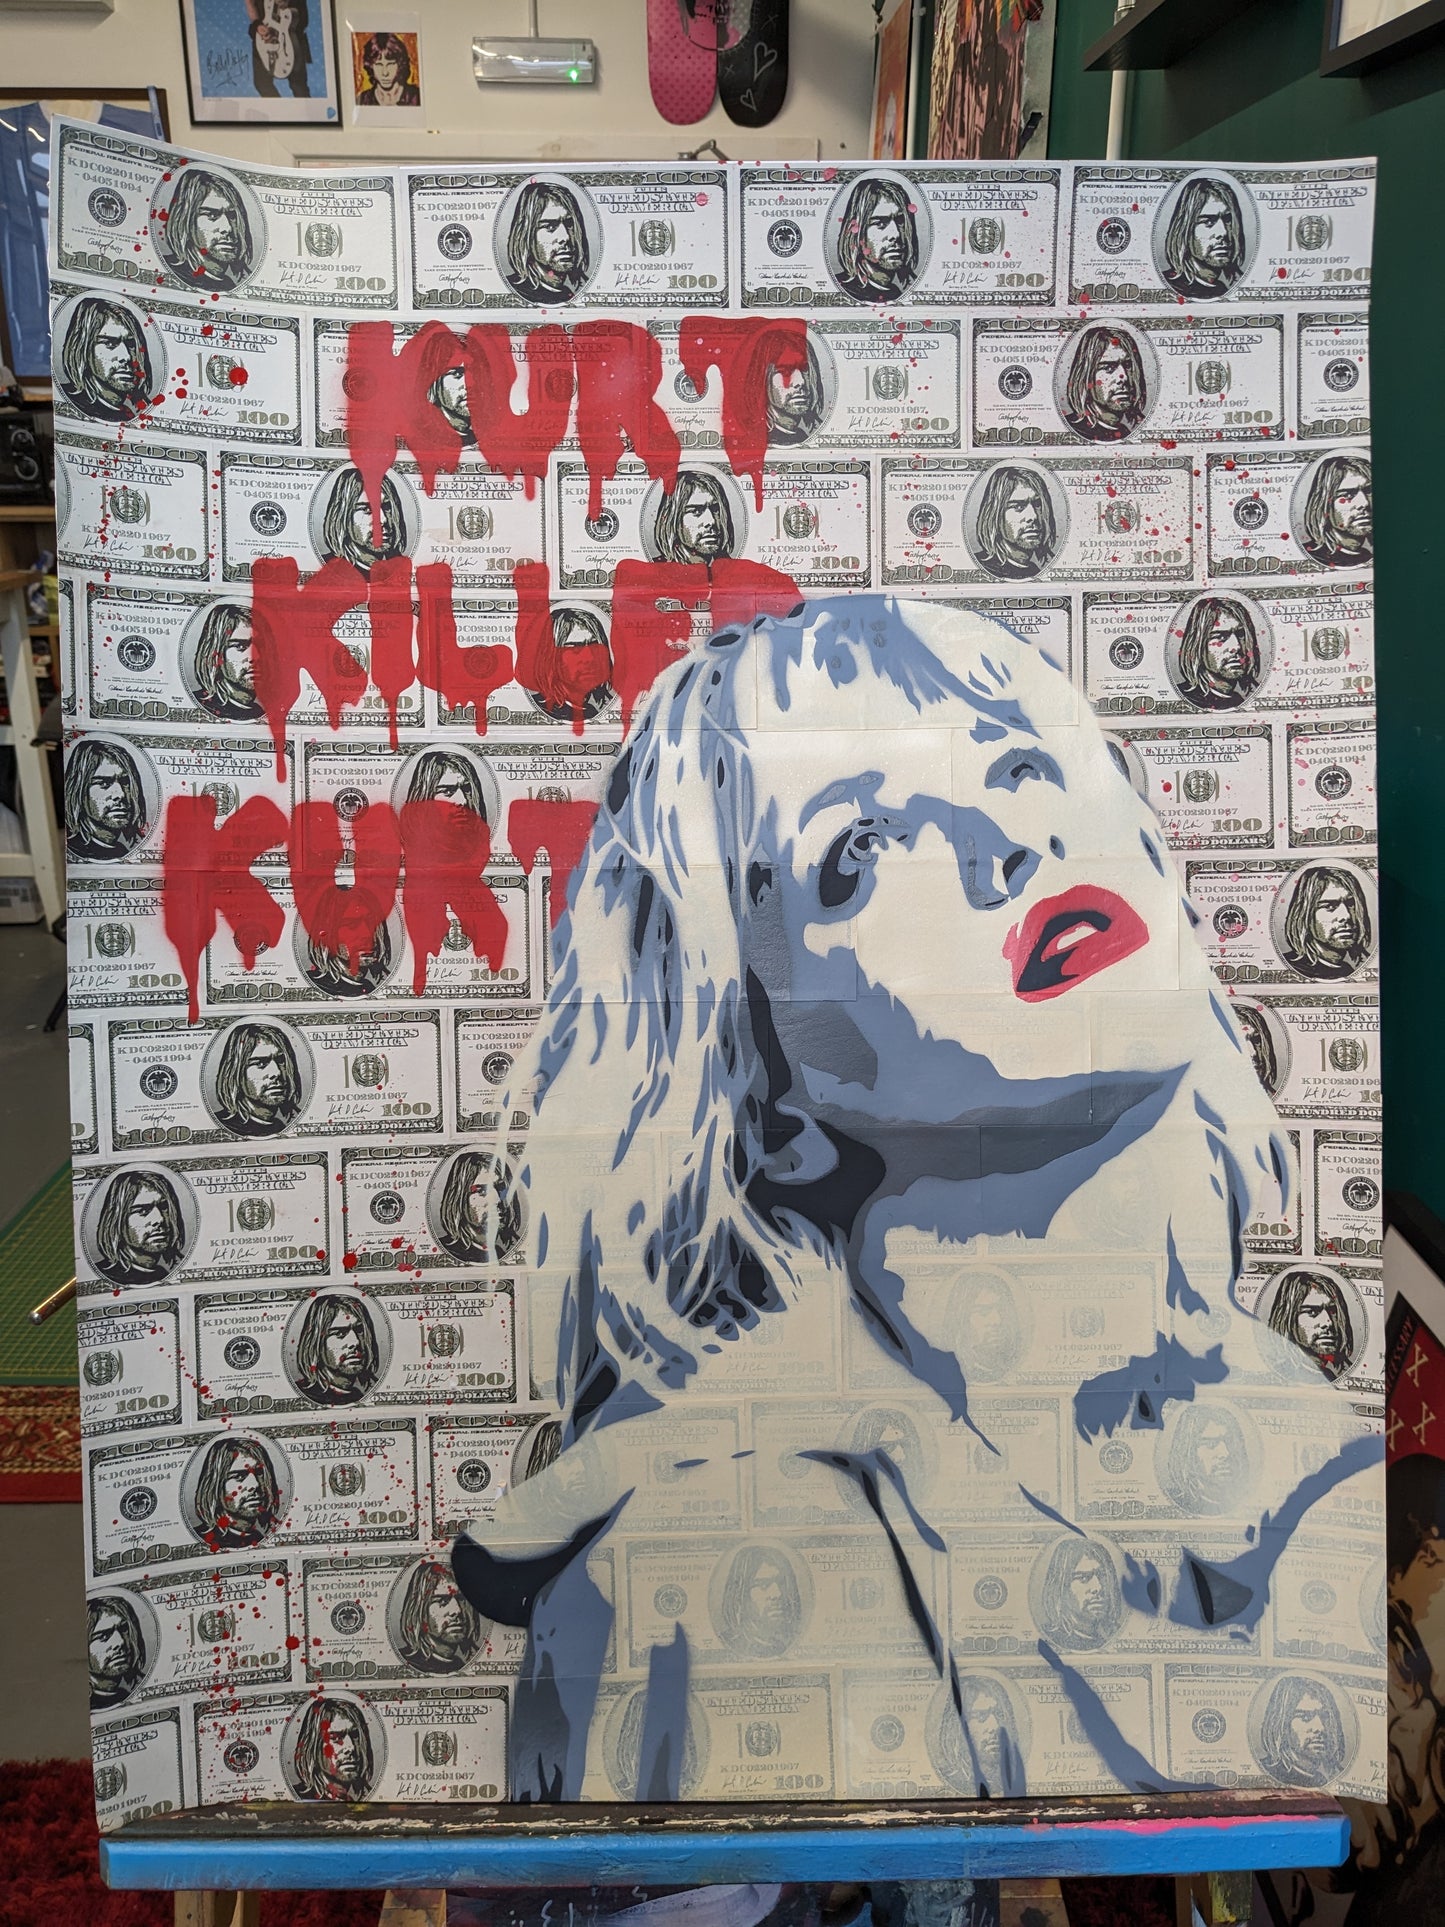 Kurt Killed Kurt Original Spray Painting 23" x 29.5"